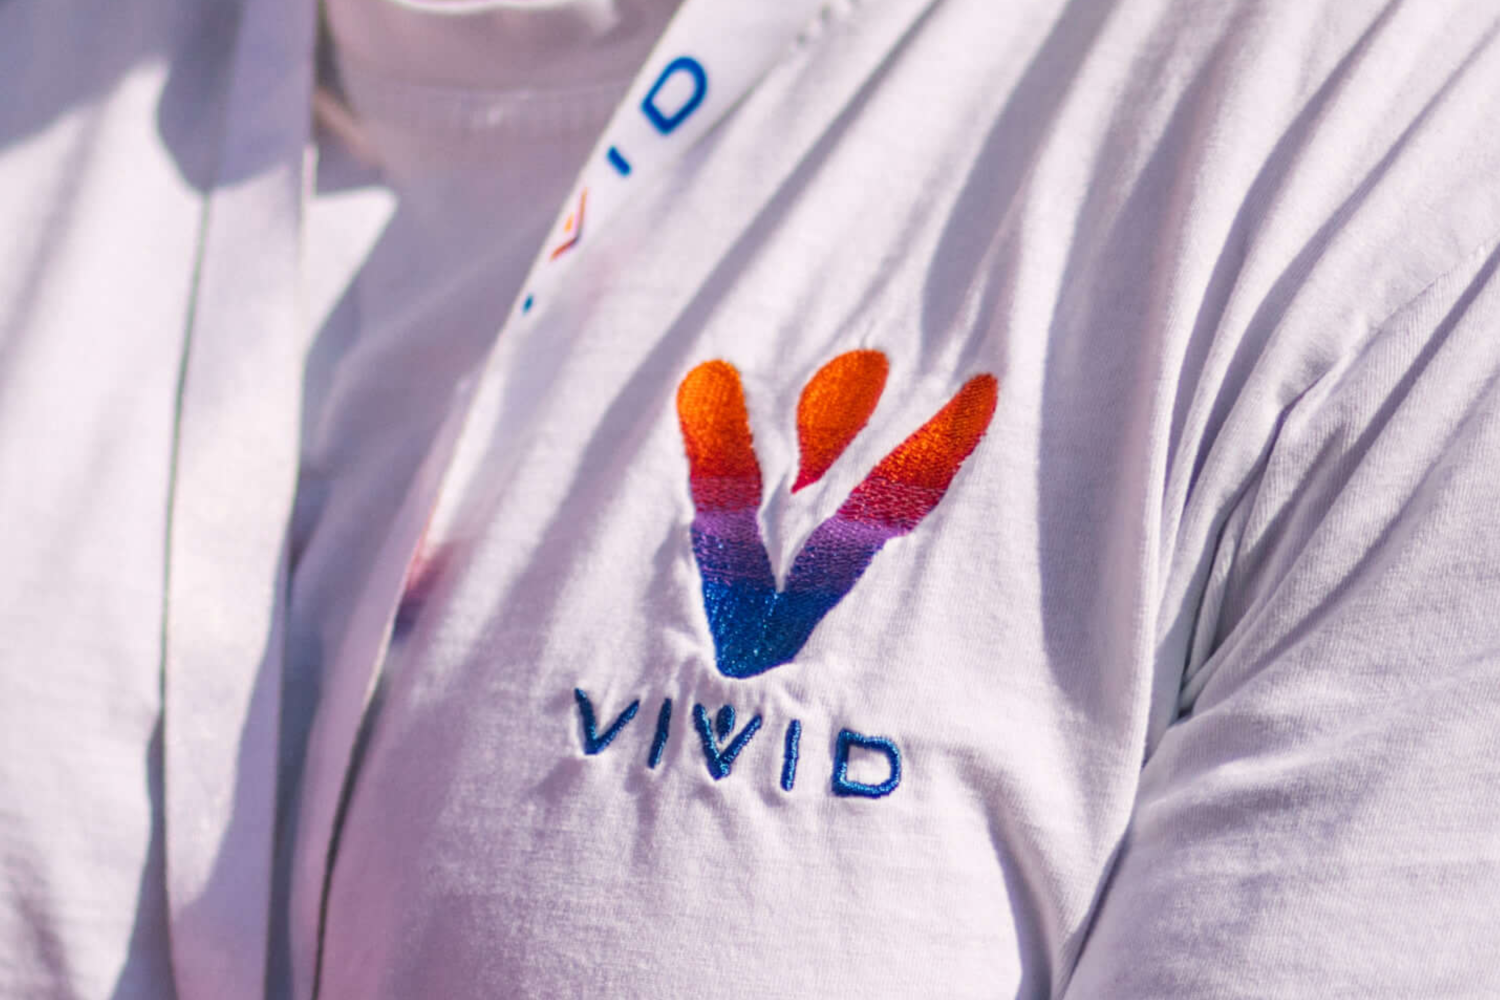 VIVID logo on t-shirt